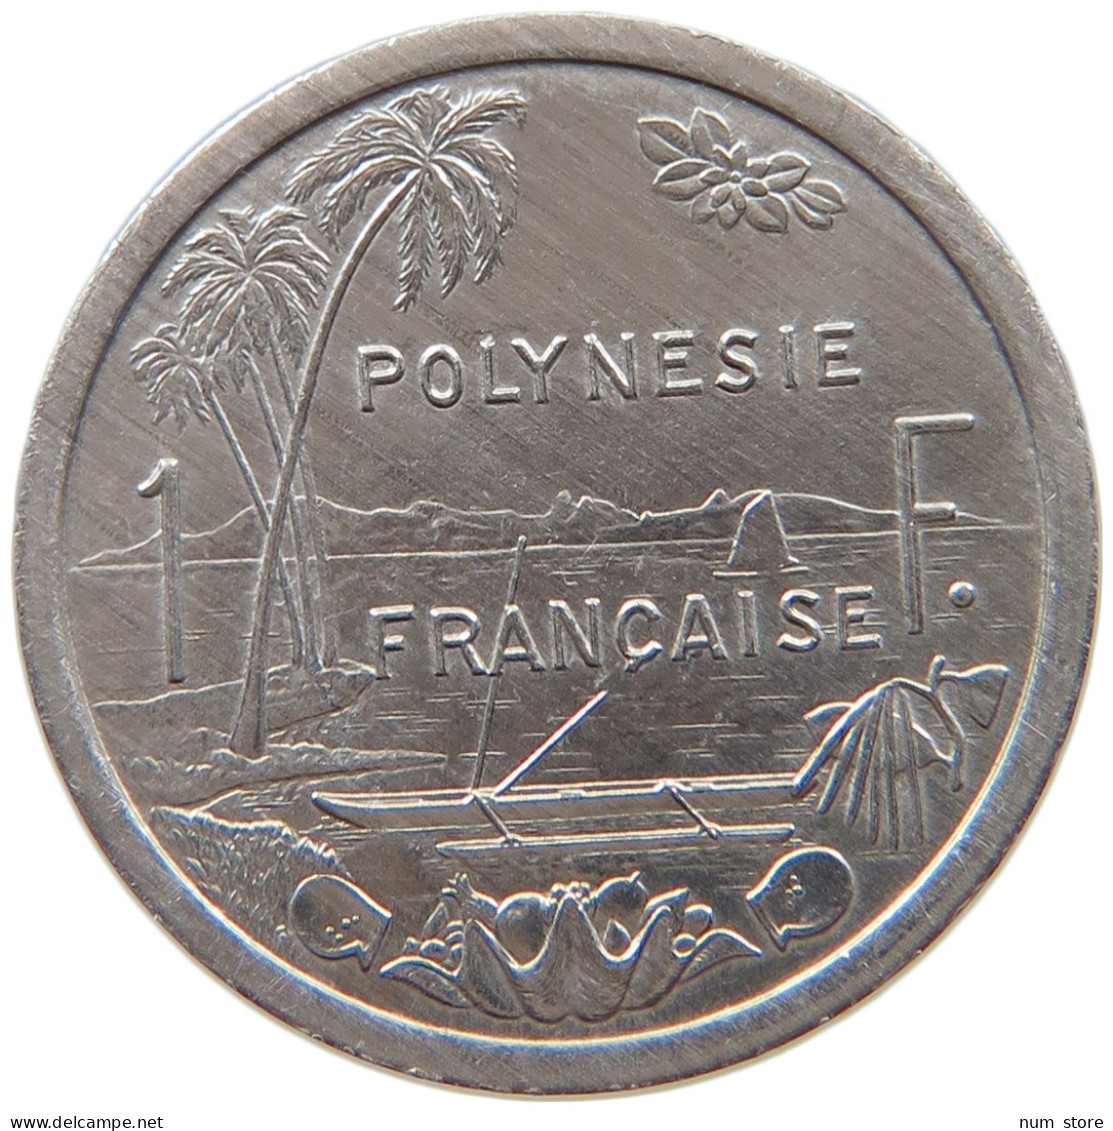 POLYNESIA FRANC 1999  #MA 065798 - Other - Oceania